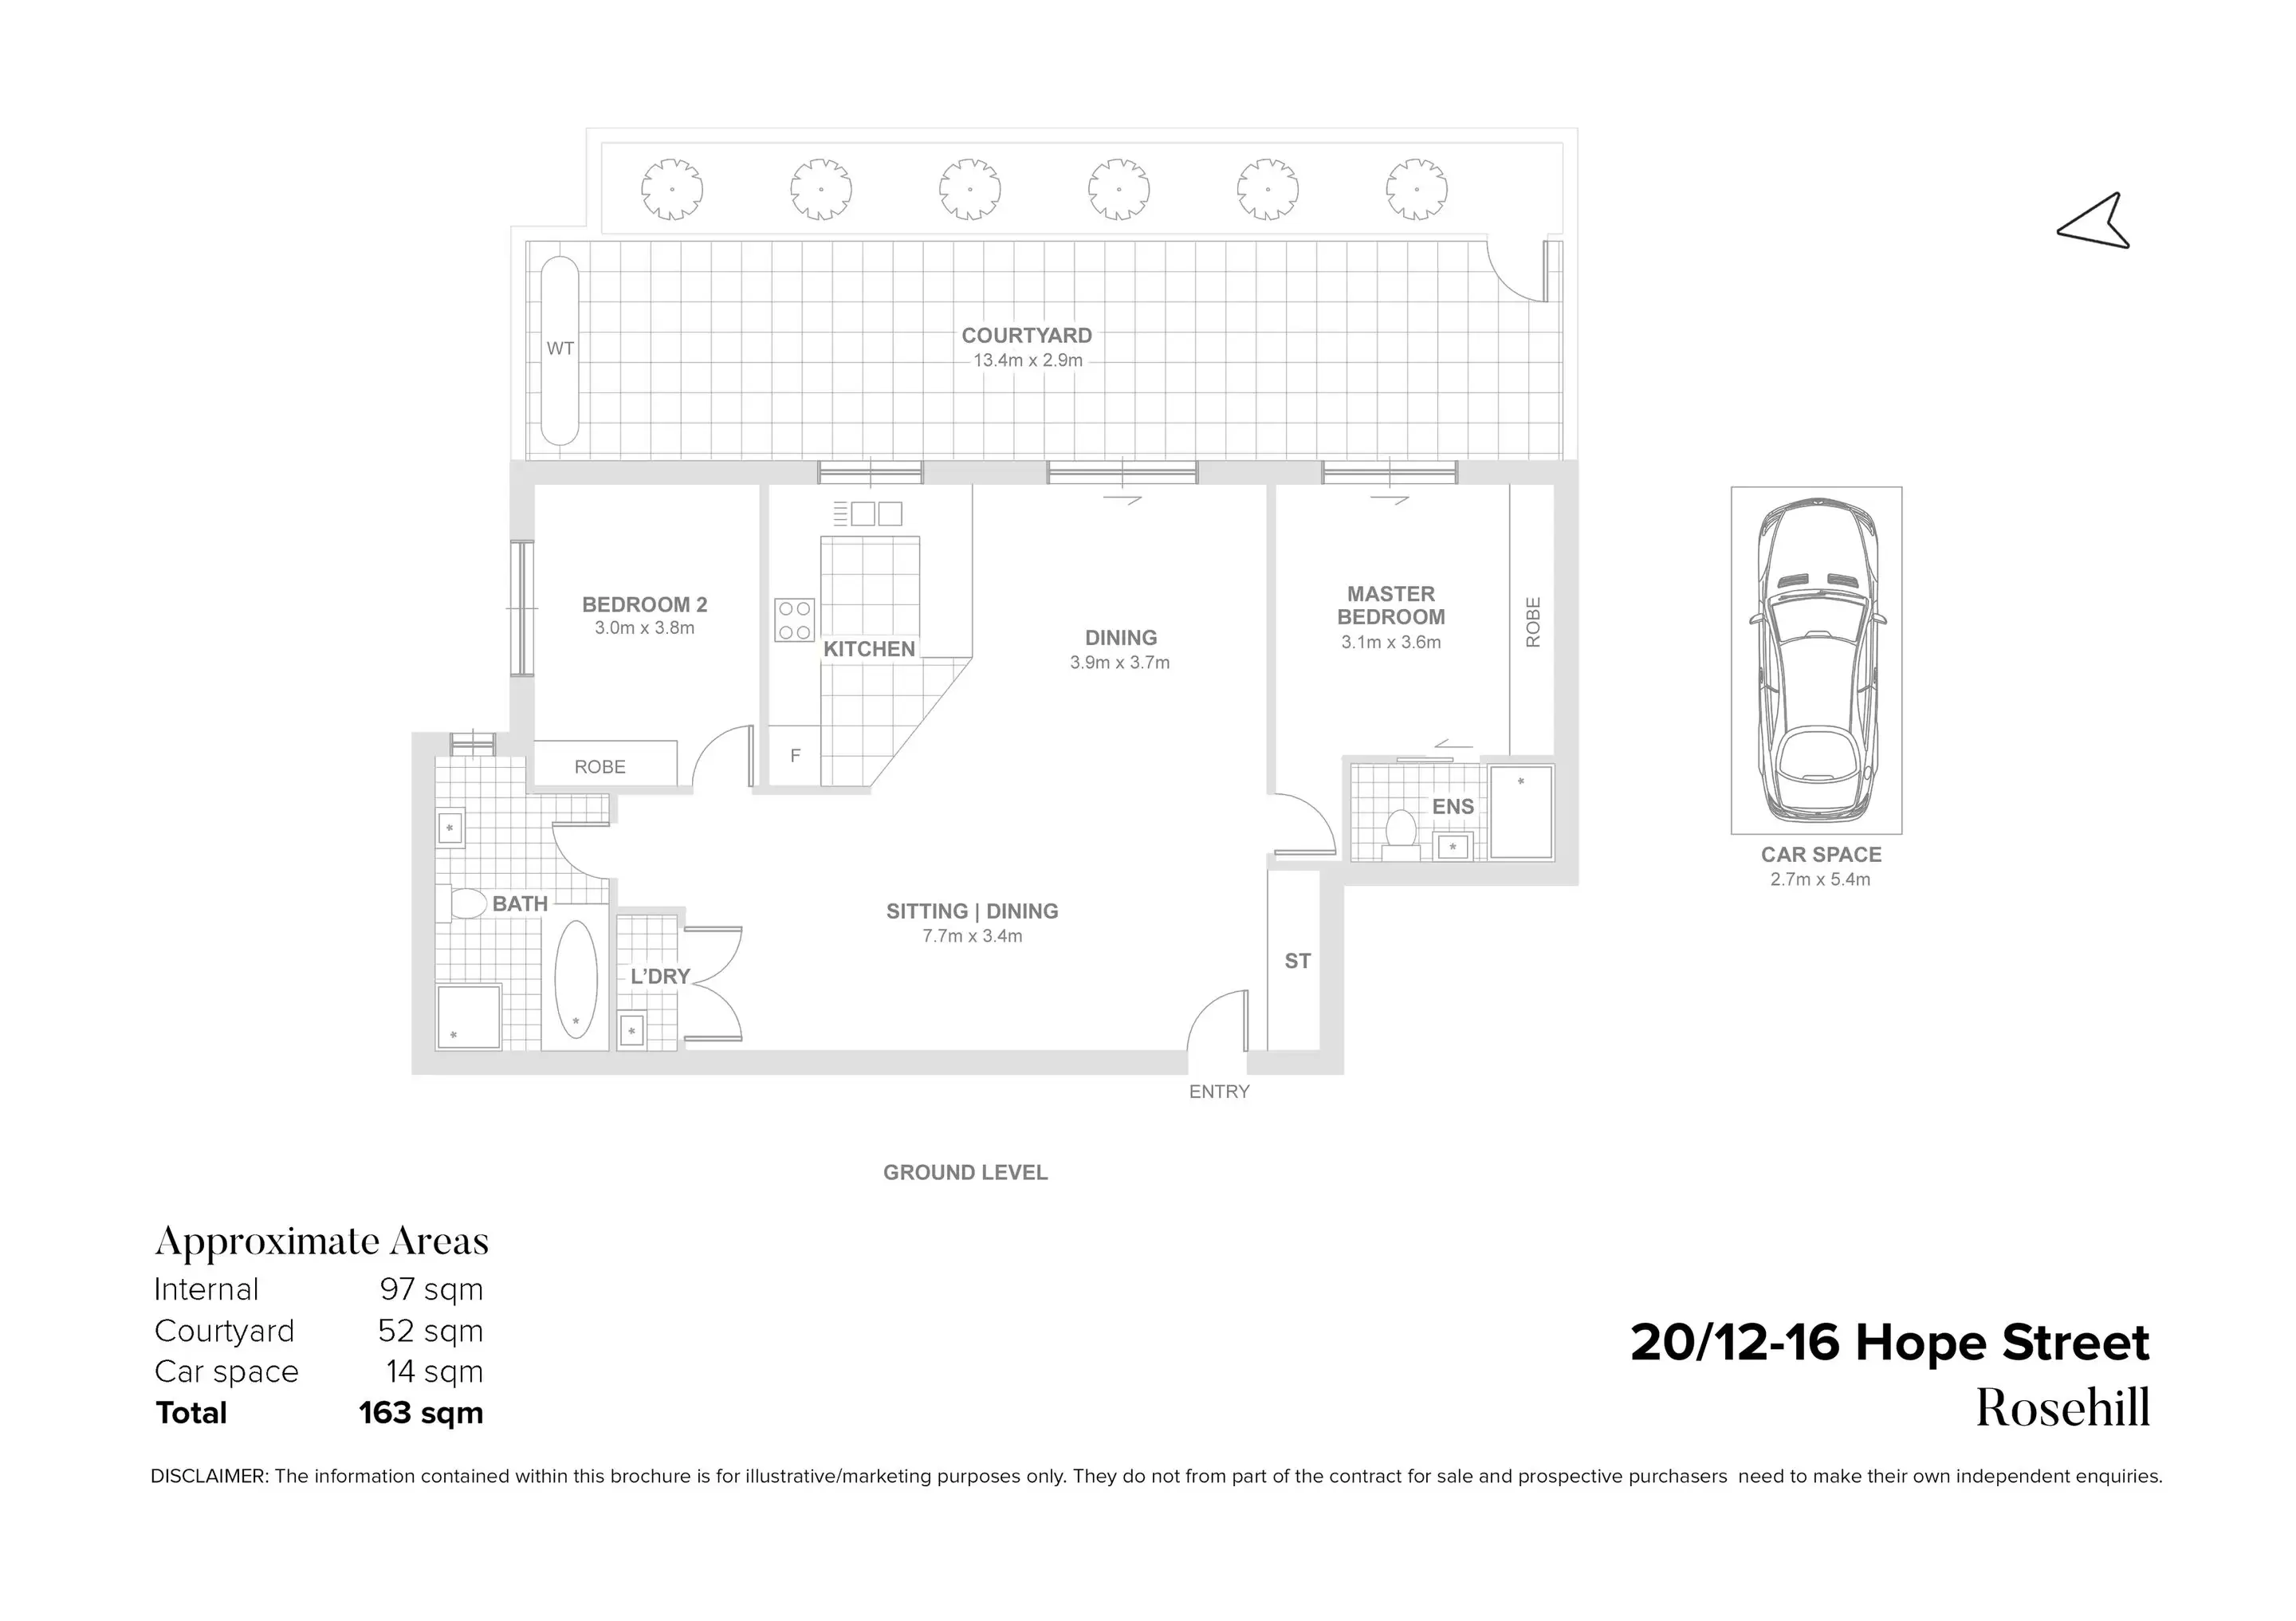 20/12-16 Hope Street, Rosehill Sold by Chidiac Realty - floorplan